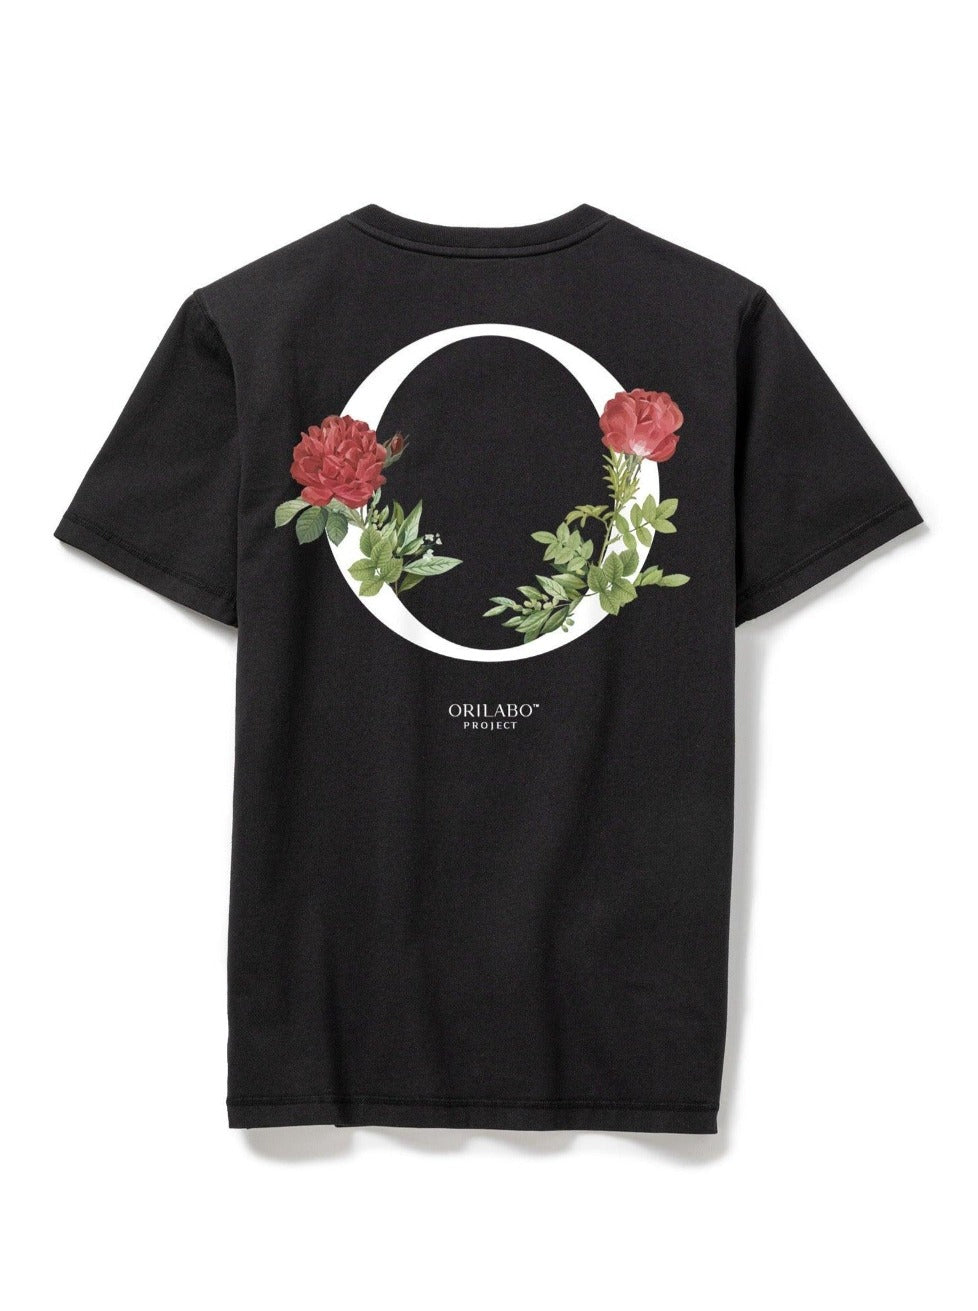 Men's O-Roses T-shirt - Black - ORILABO Project